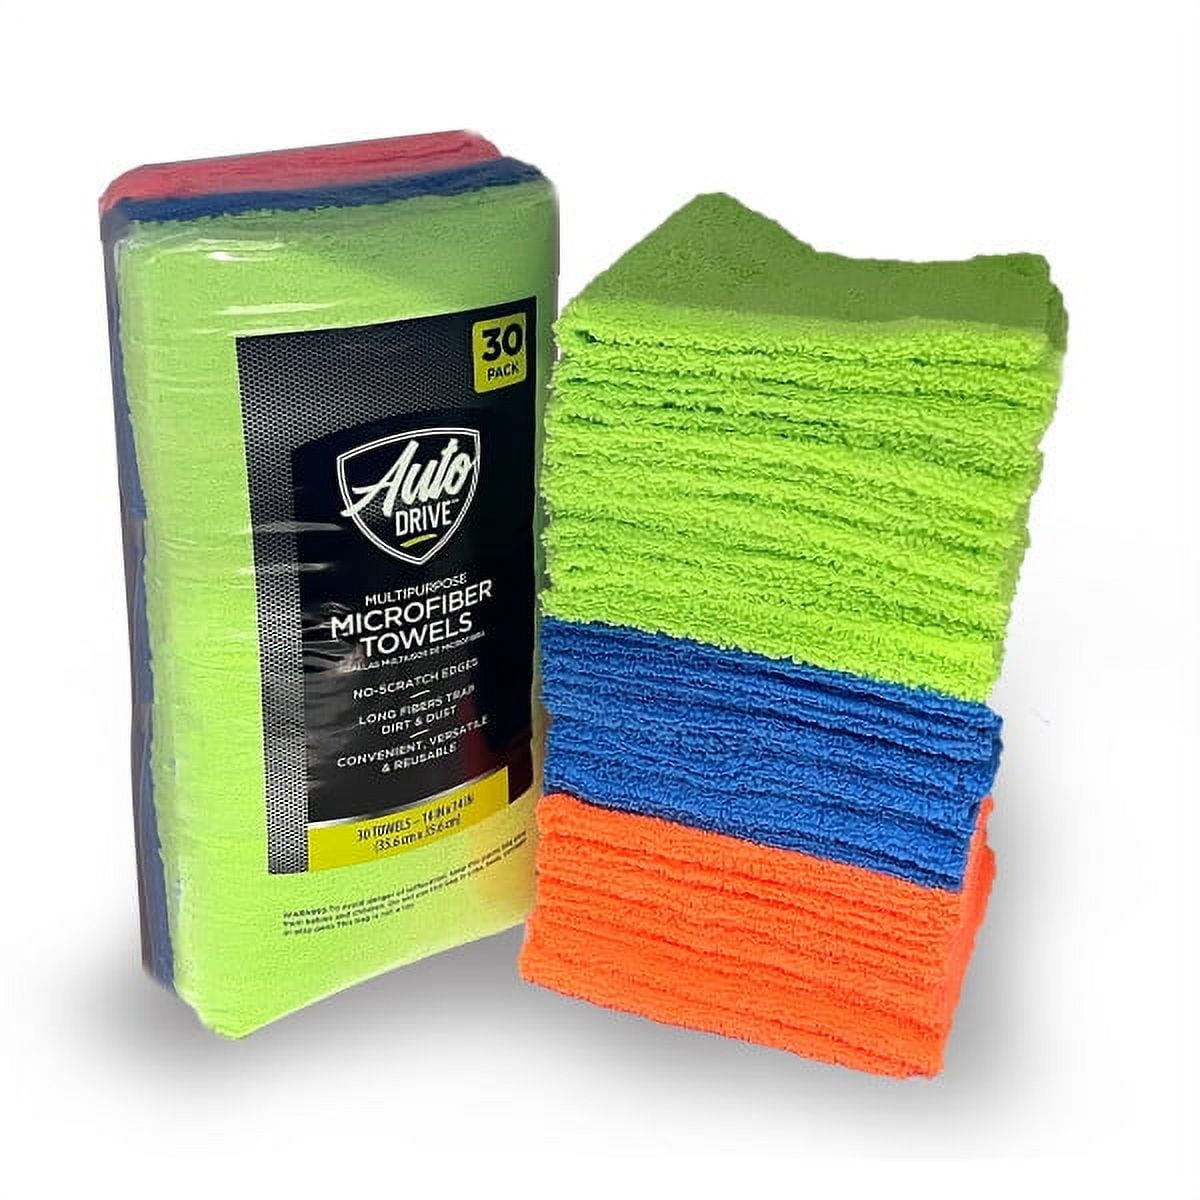 Auto Drive Multipurpose Microfiber Towels, Multicolor, 30 Count 